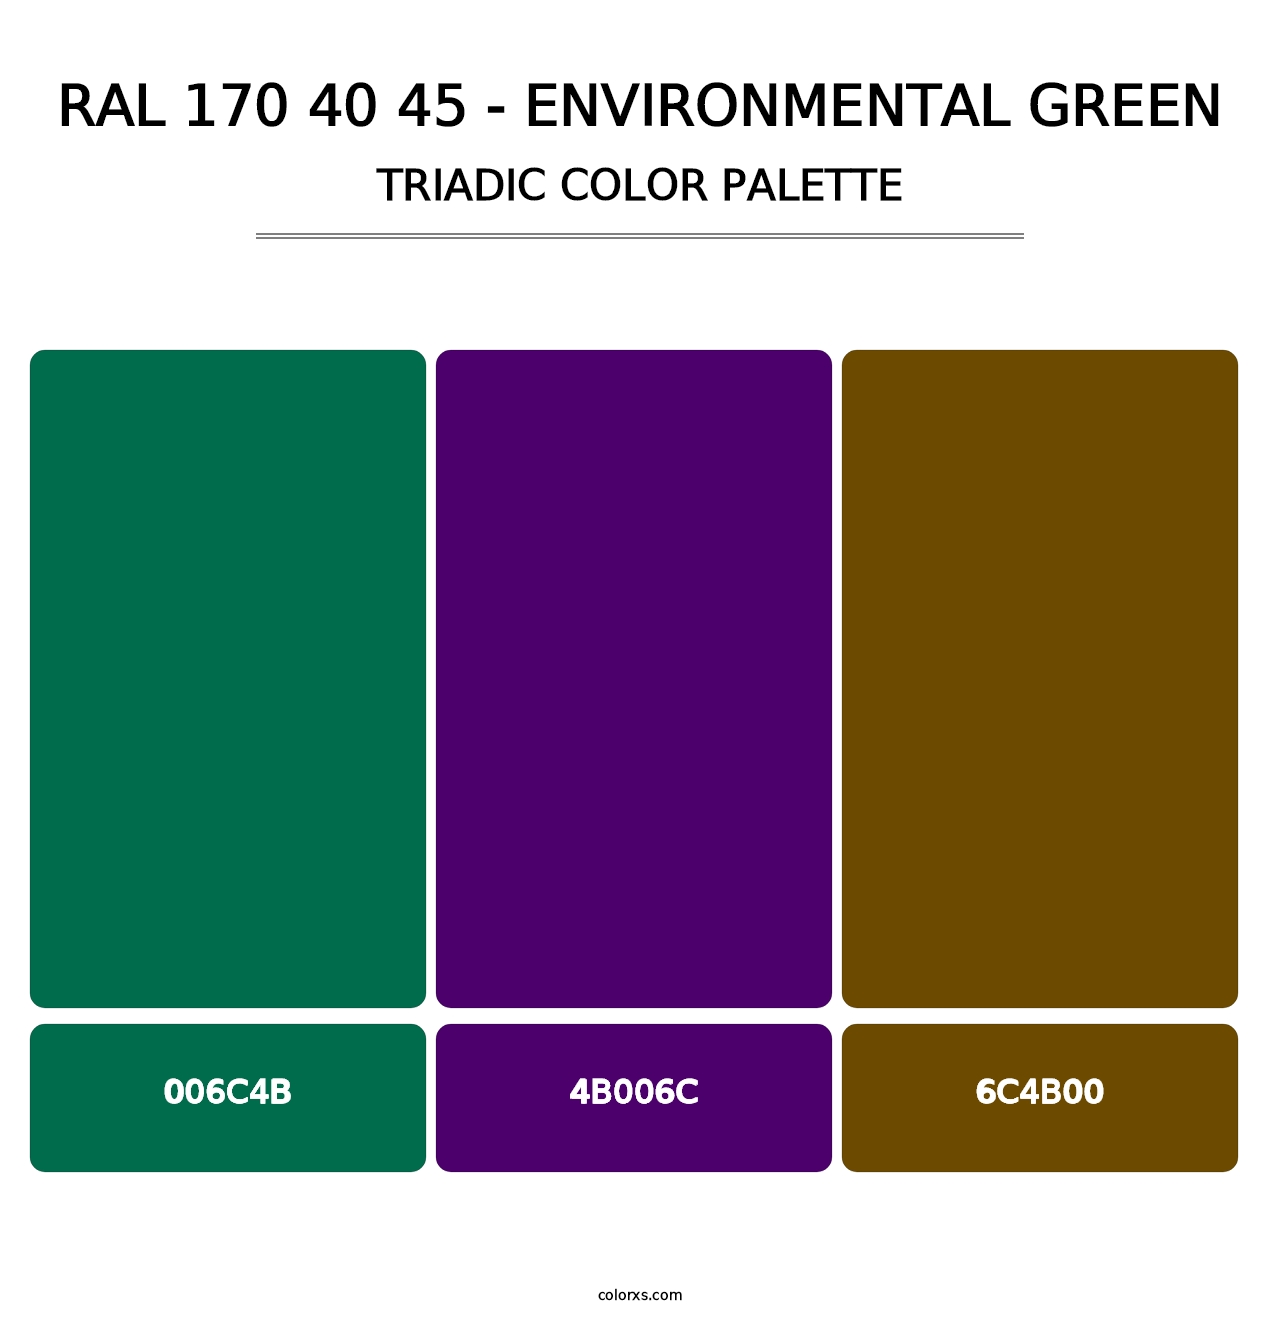 RAL 170 40 45 - Environmental Green - Triadic Color Palette